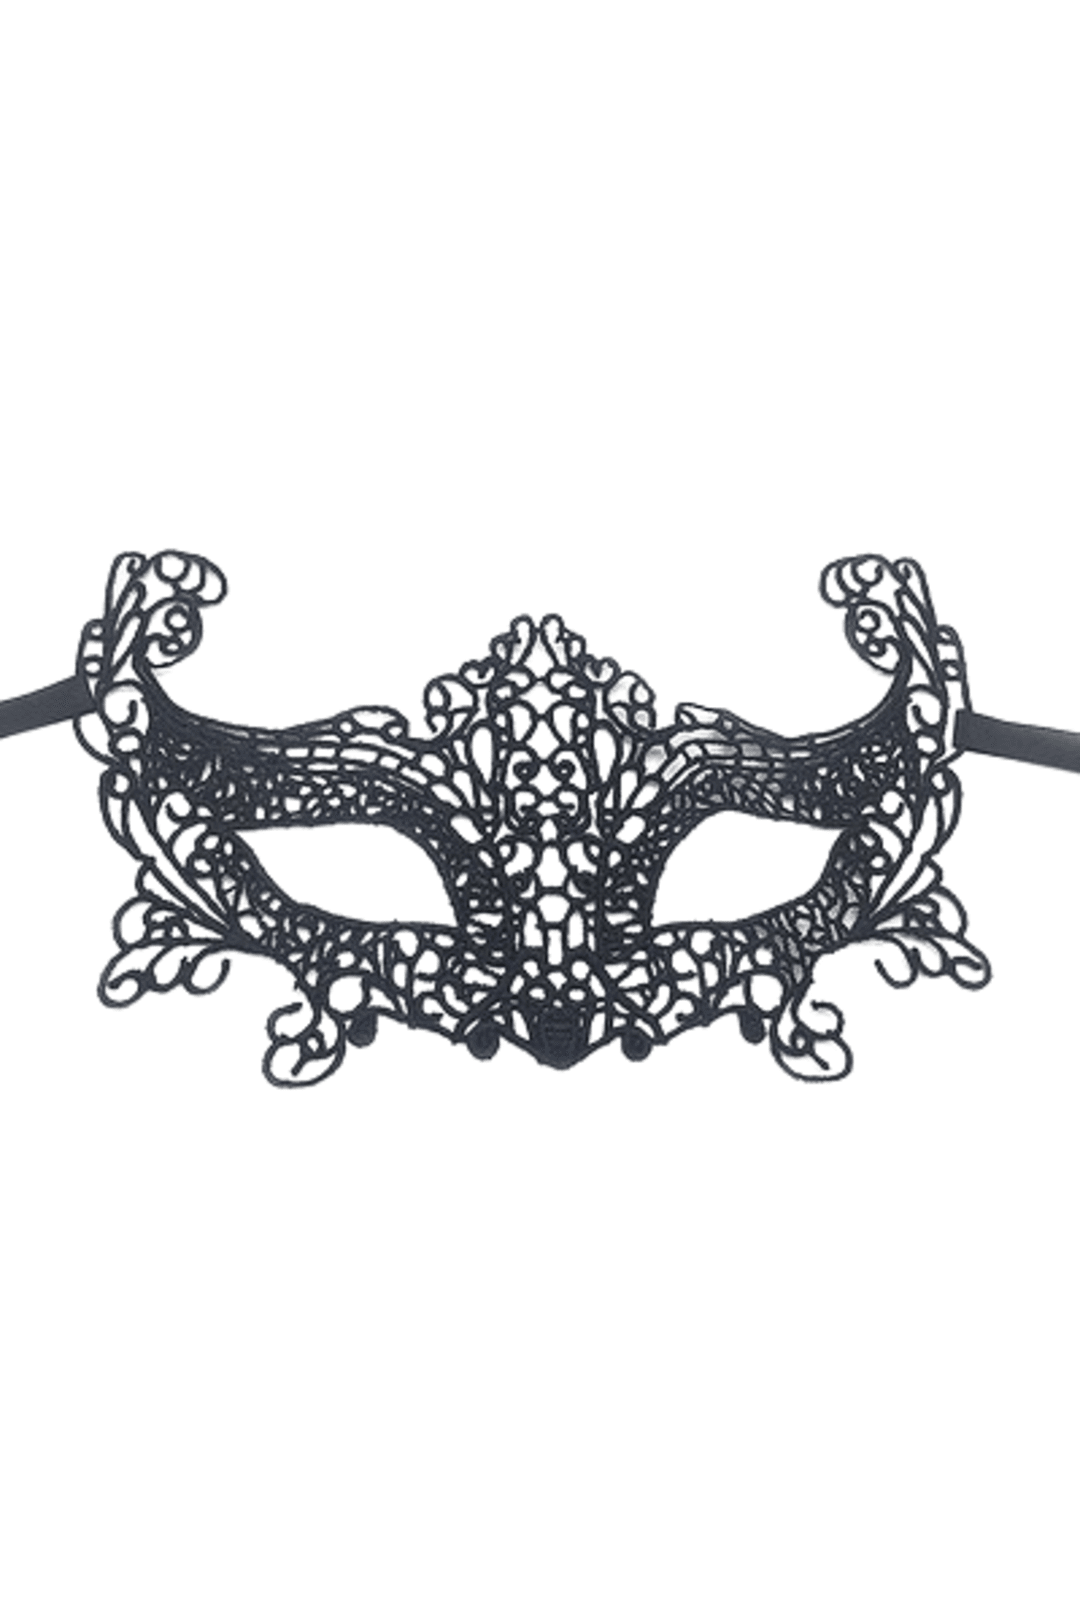 Wide Black Lace Masquerade Mask